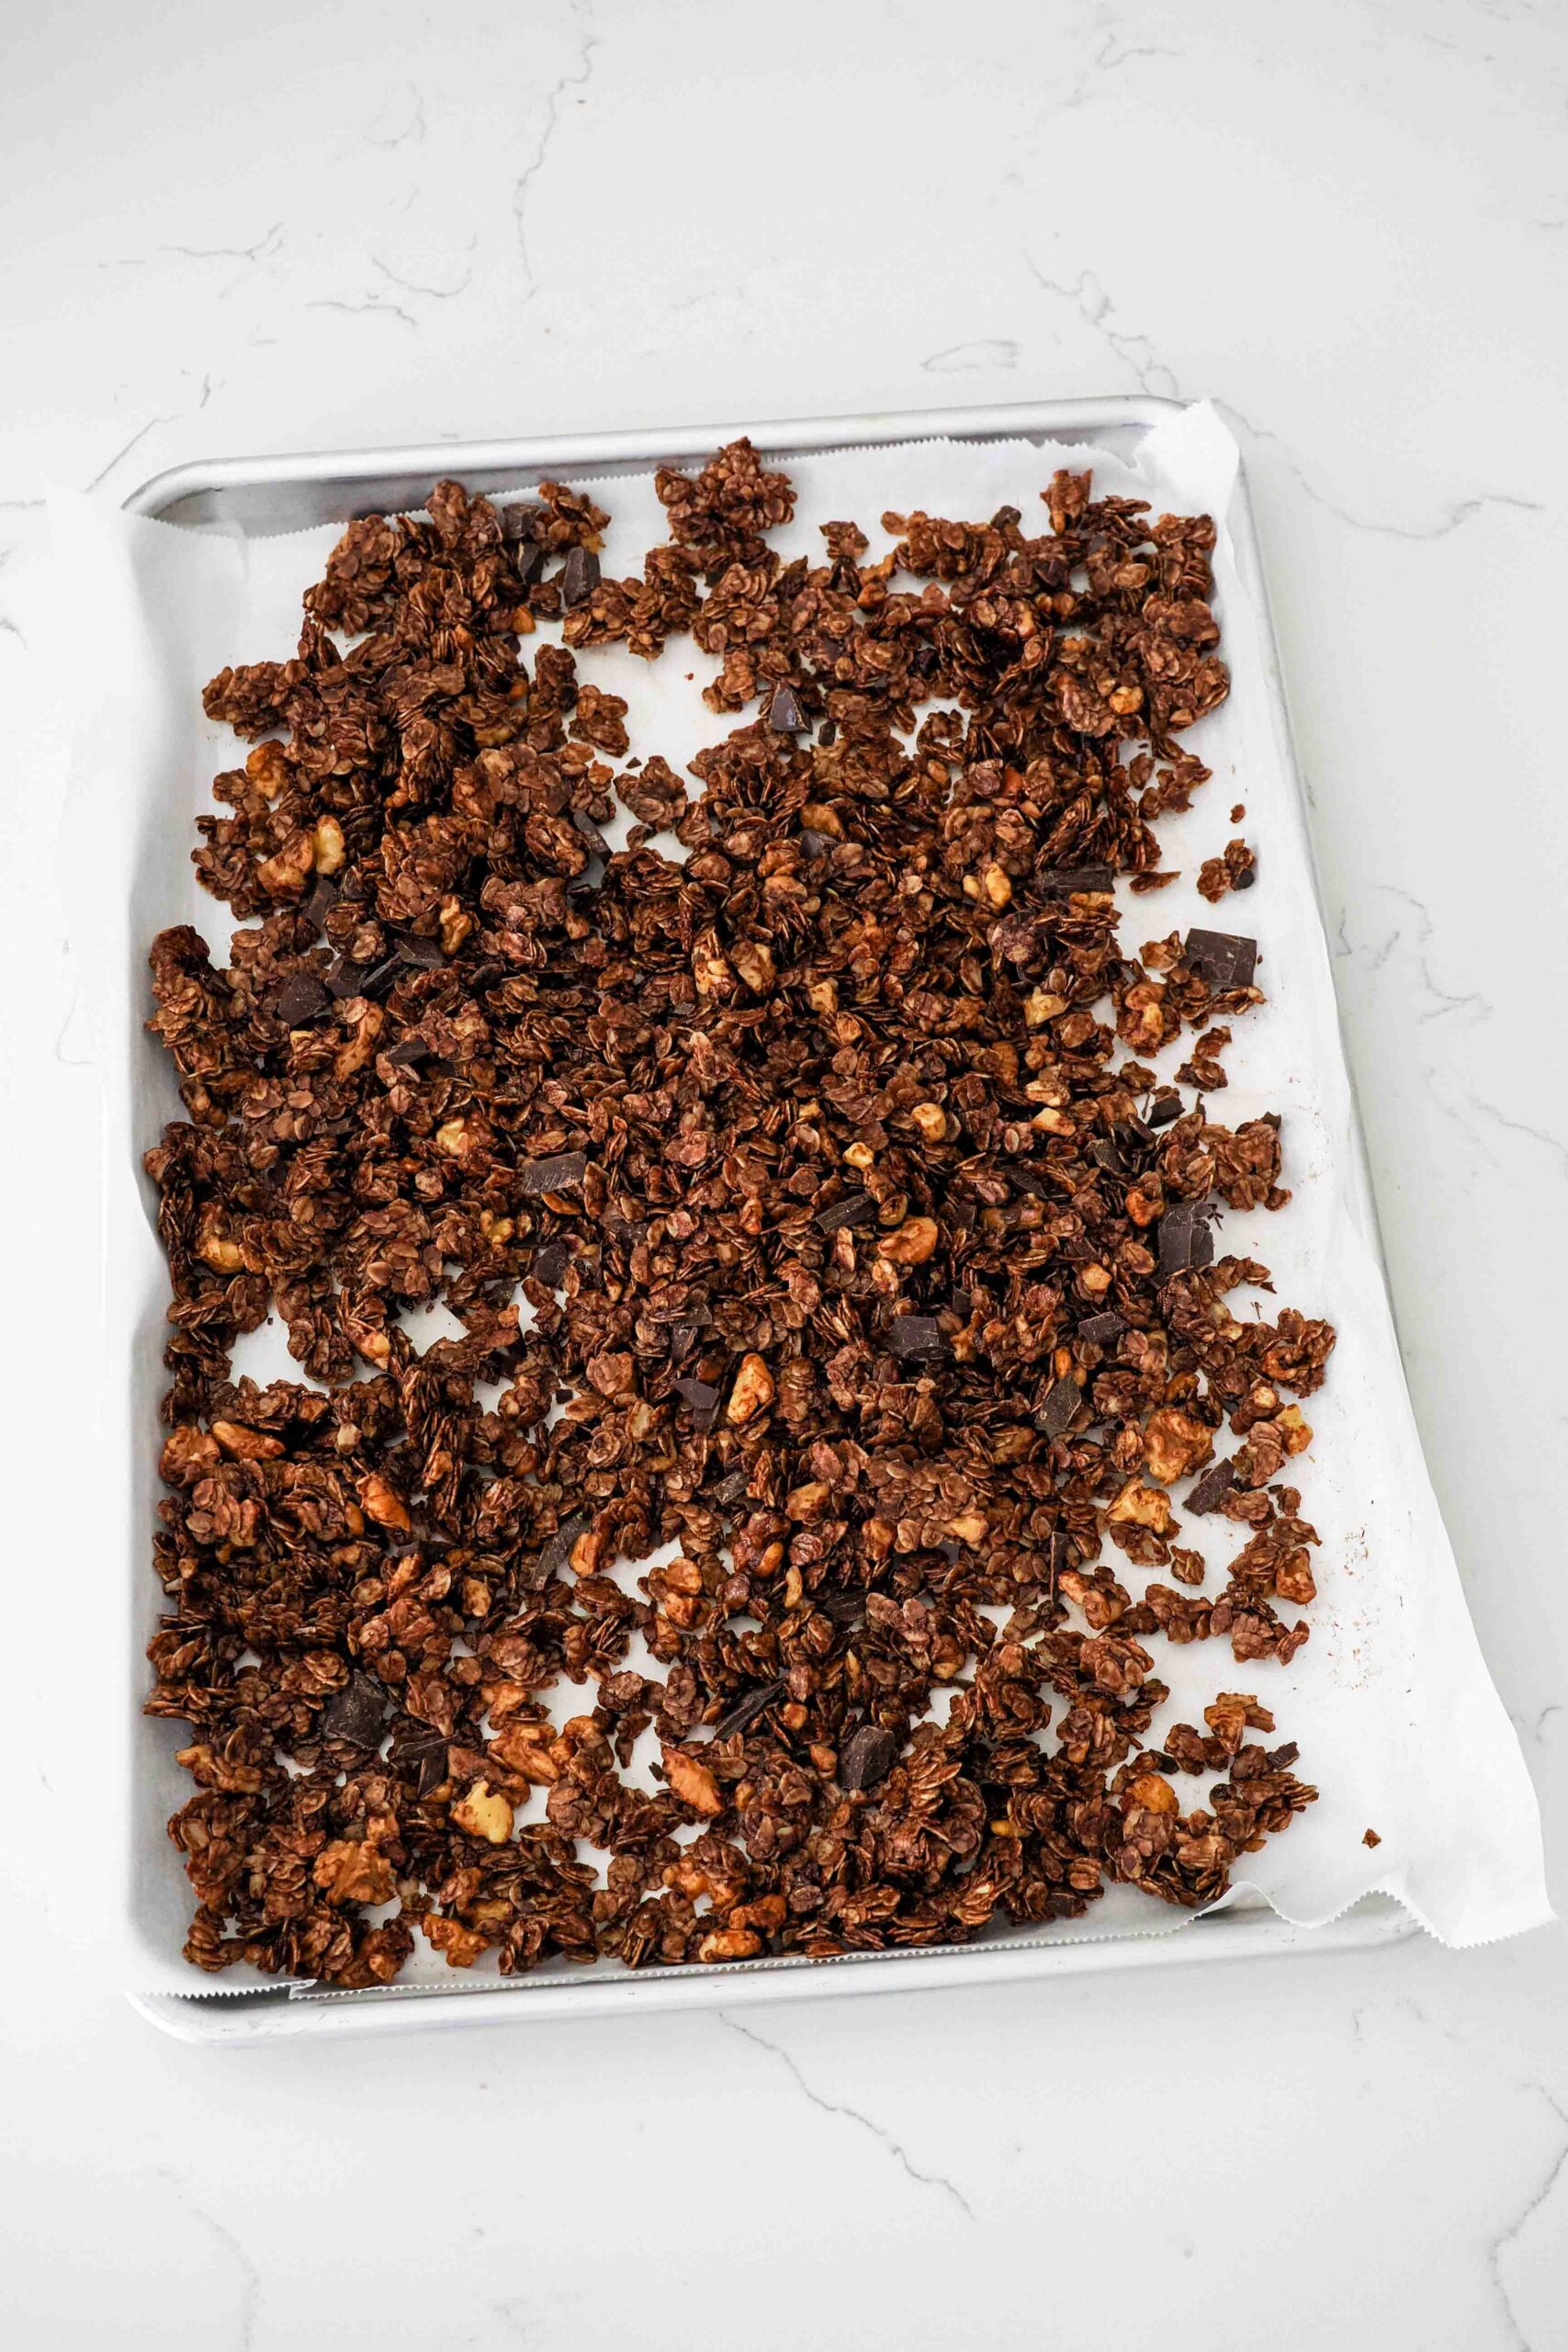 Dark chocolate granola mixed with dark chocolate chunks on a lined baking sheet.